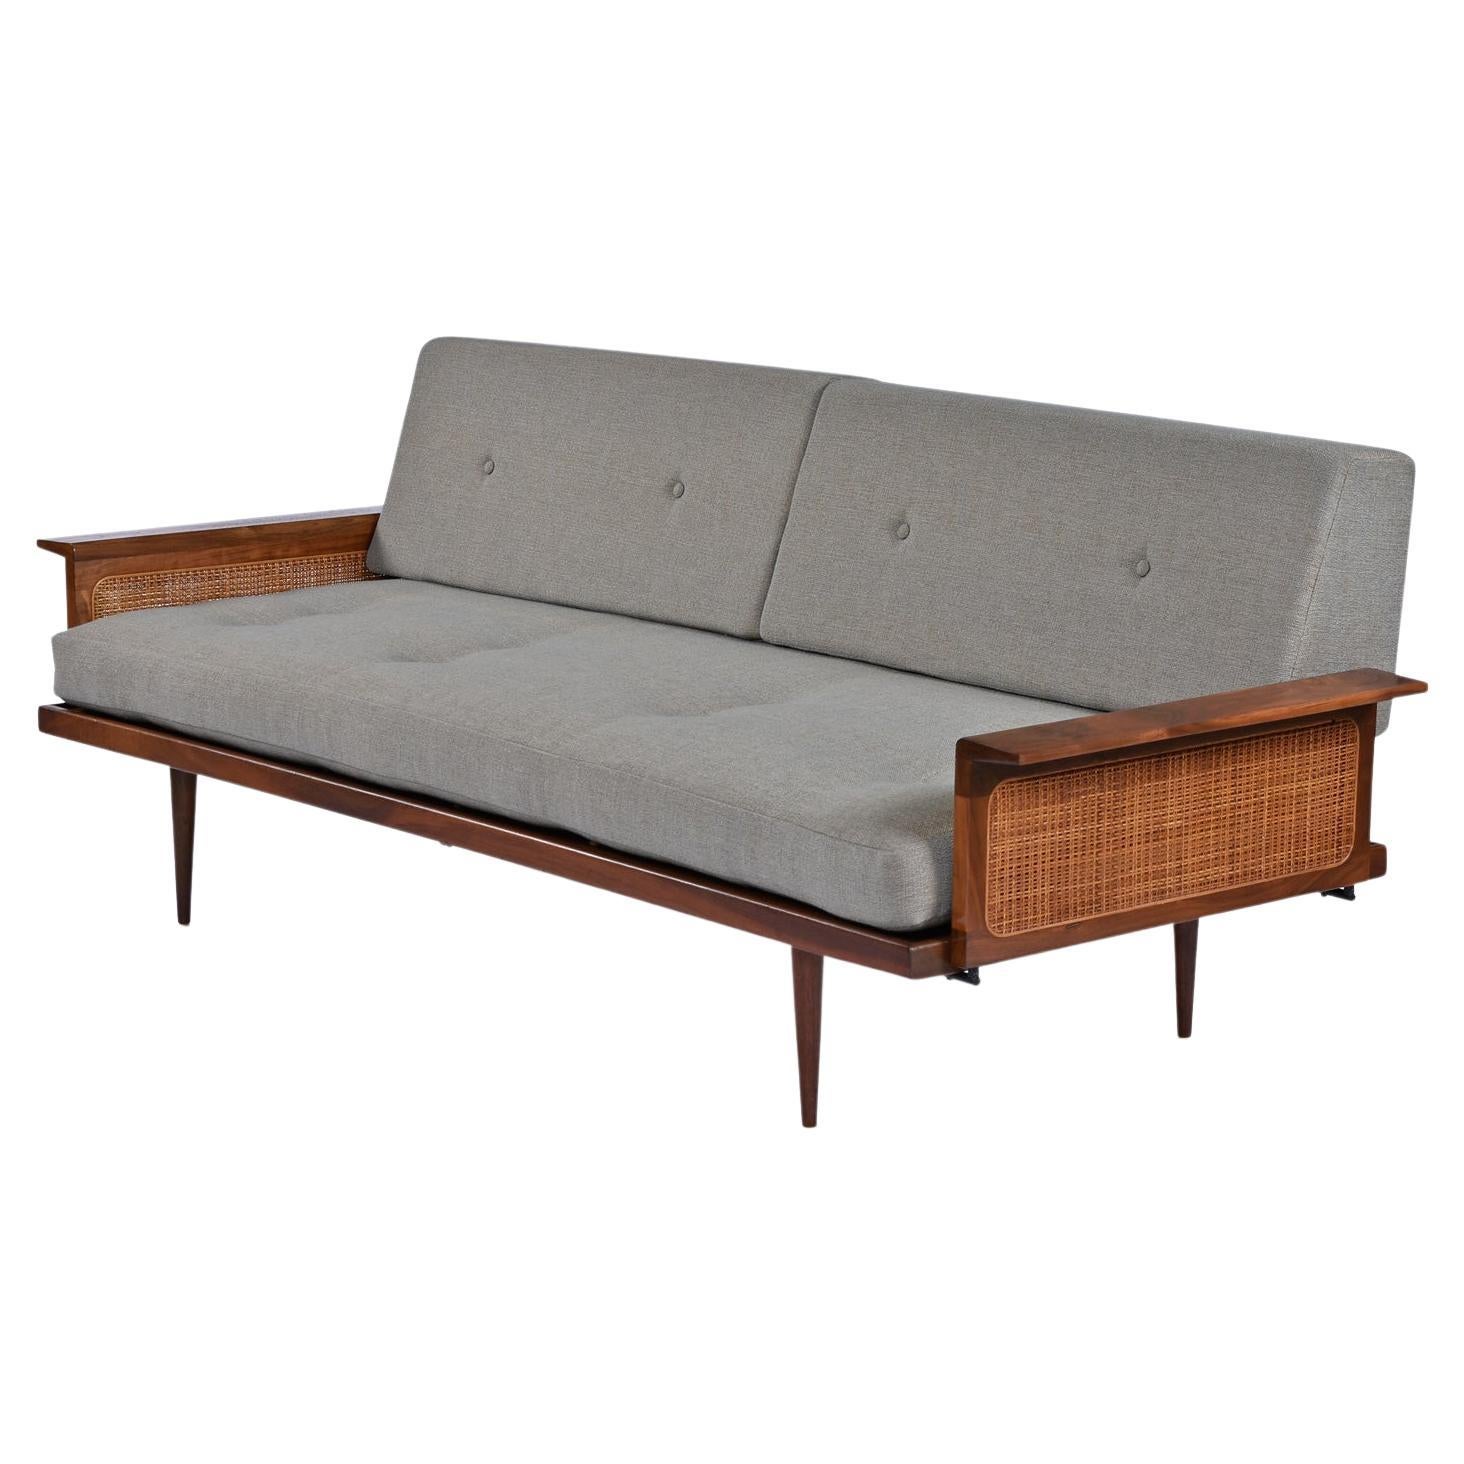 Restored Mid-Century Modern Walnut Cane Arm Daybed Sofa